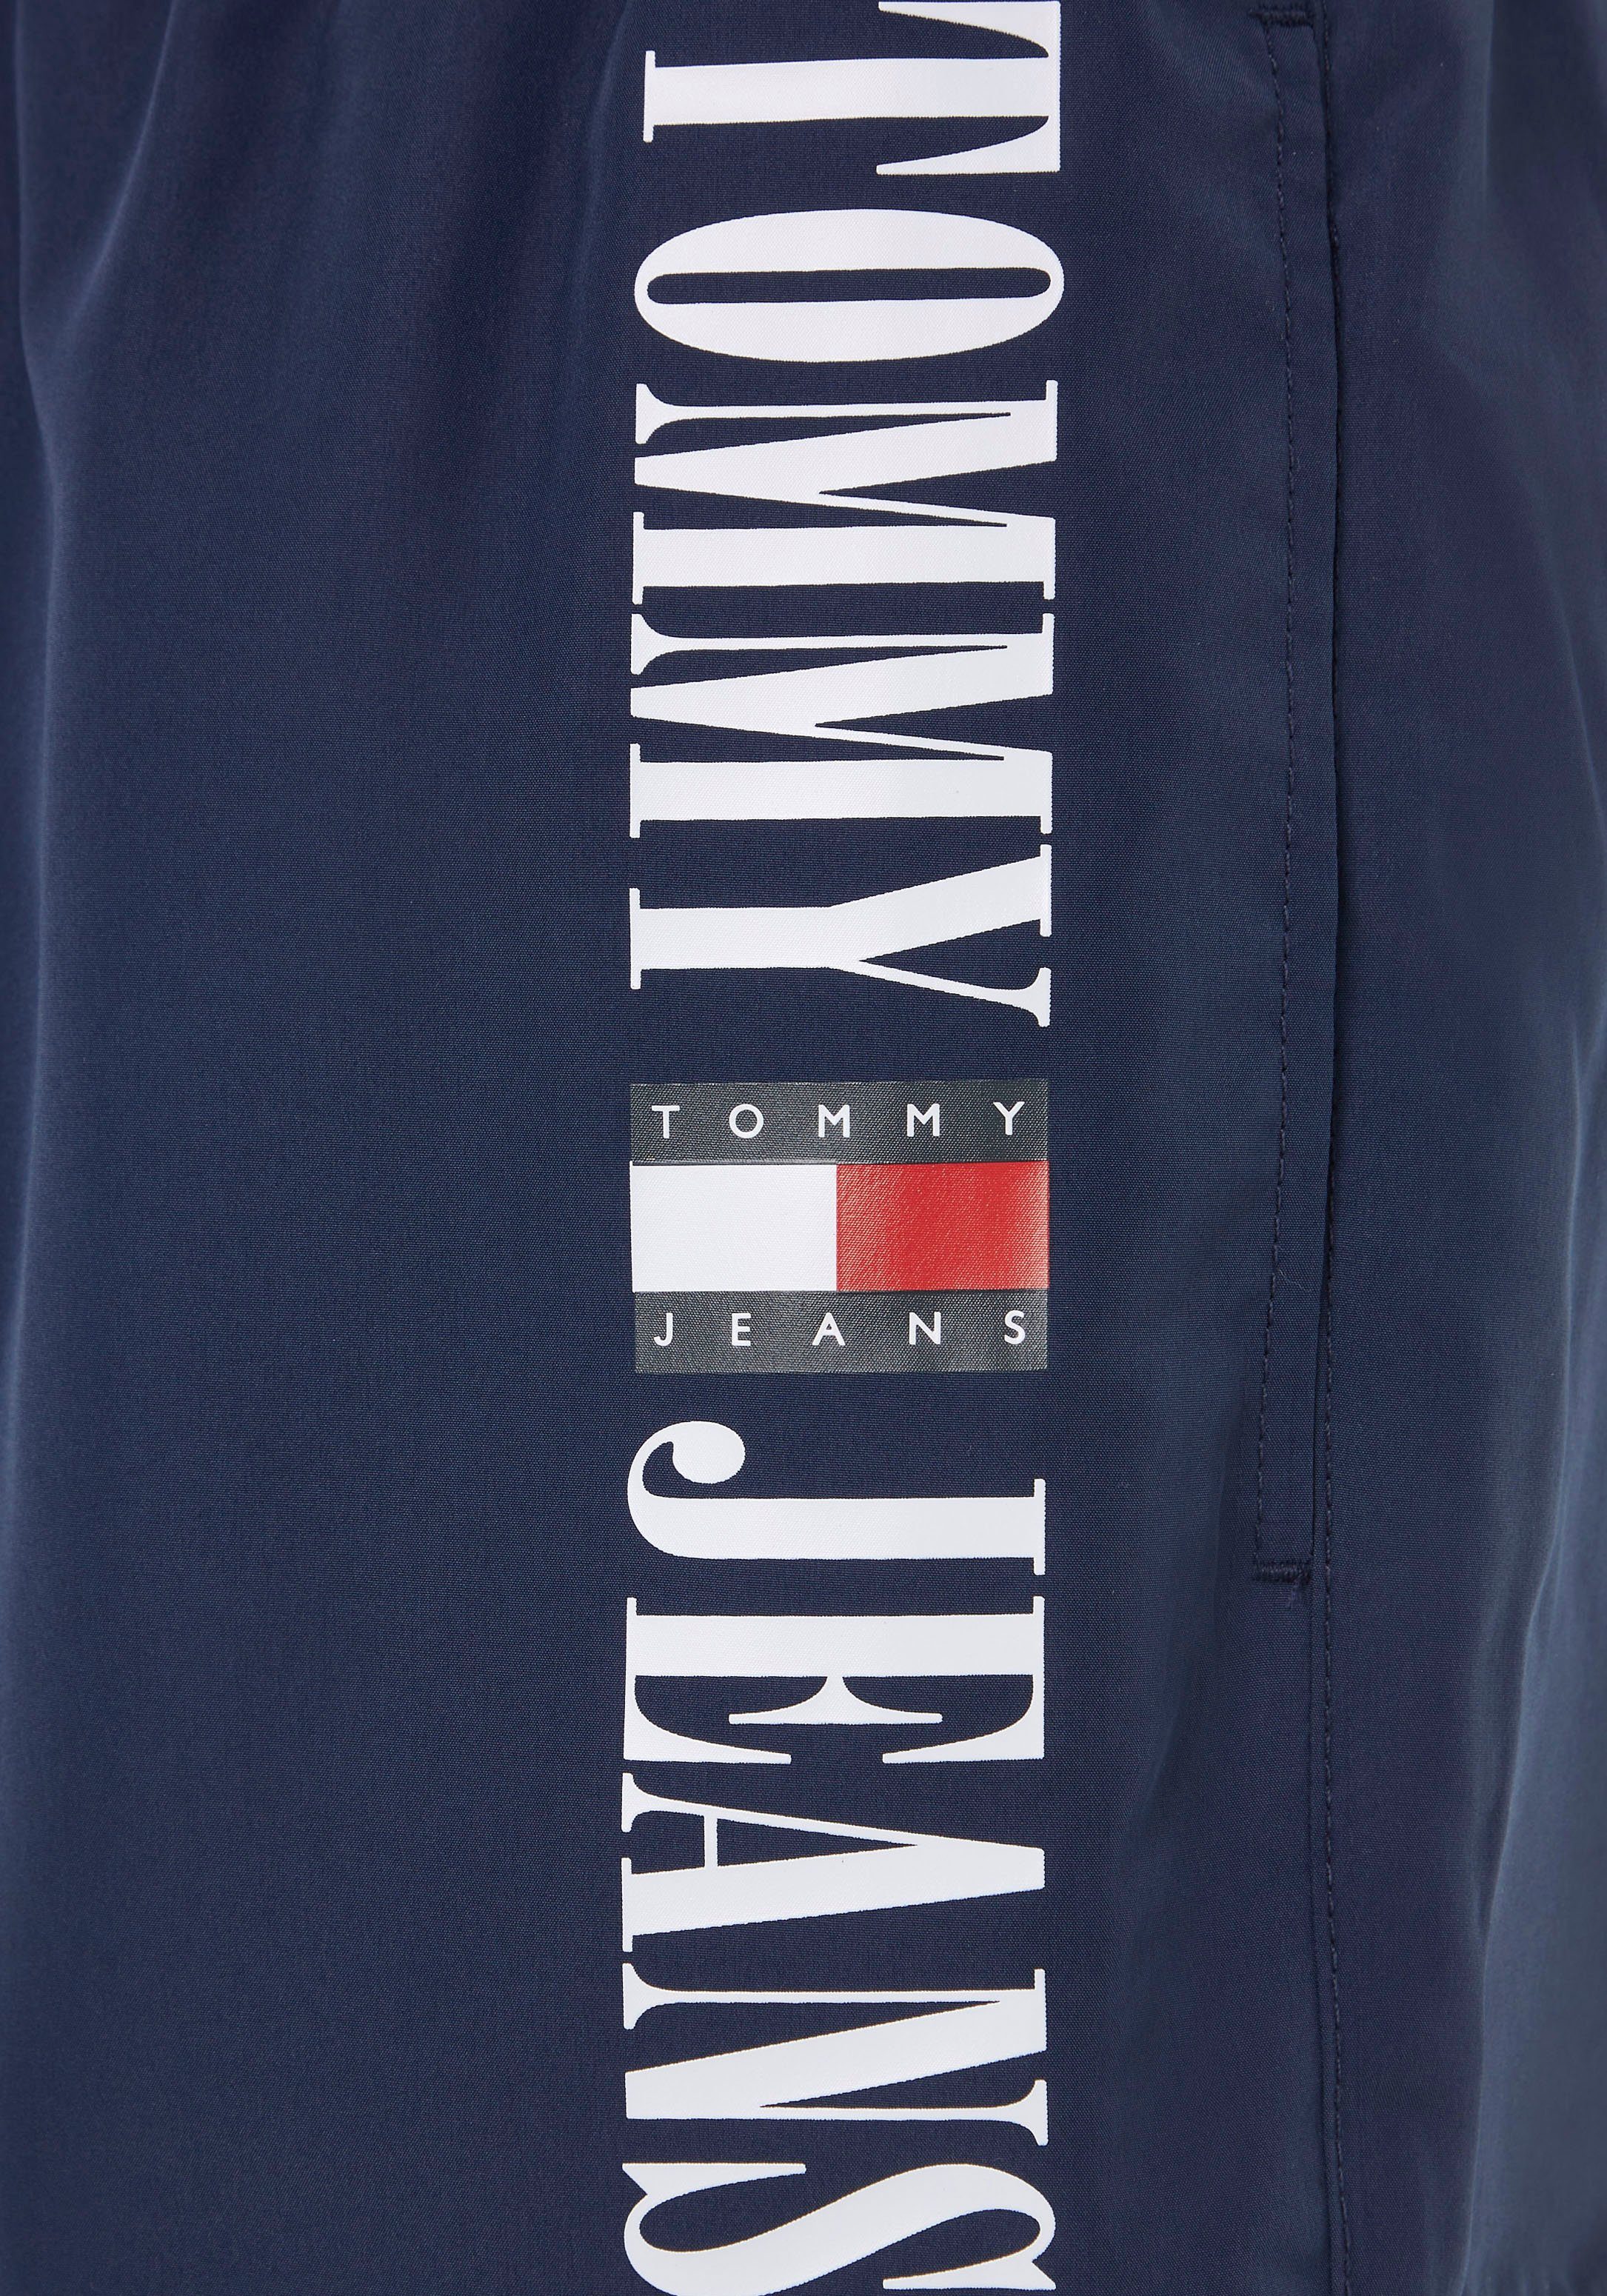 Markenlabel Hilfiger Hilfiger Twilight-Navy SHORT Badeshorts DRAWSTRING Swimwear Tommy SF Tommy mit